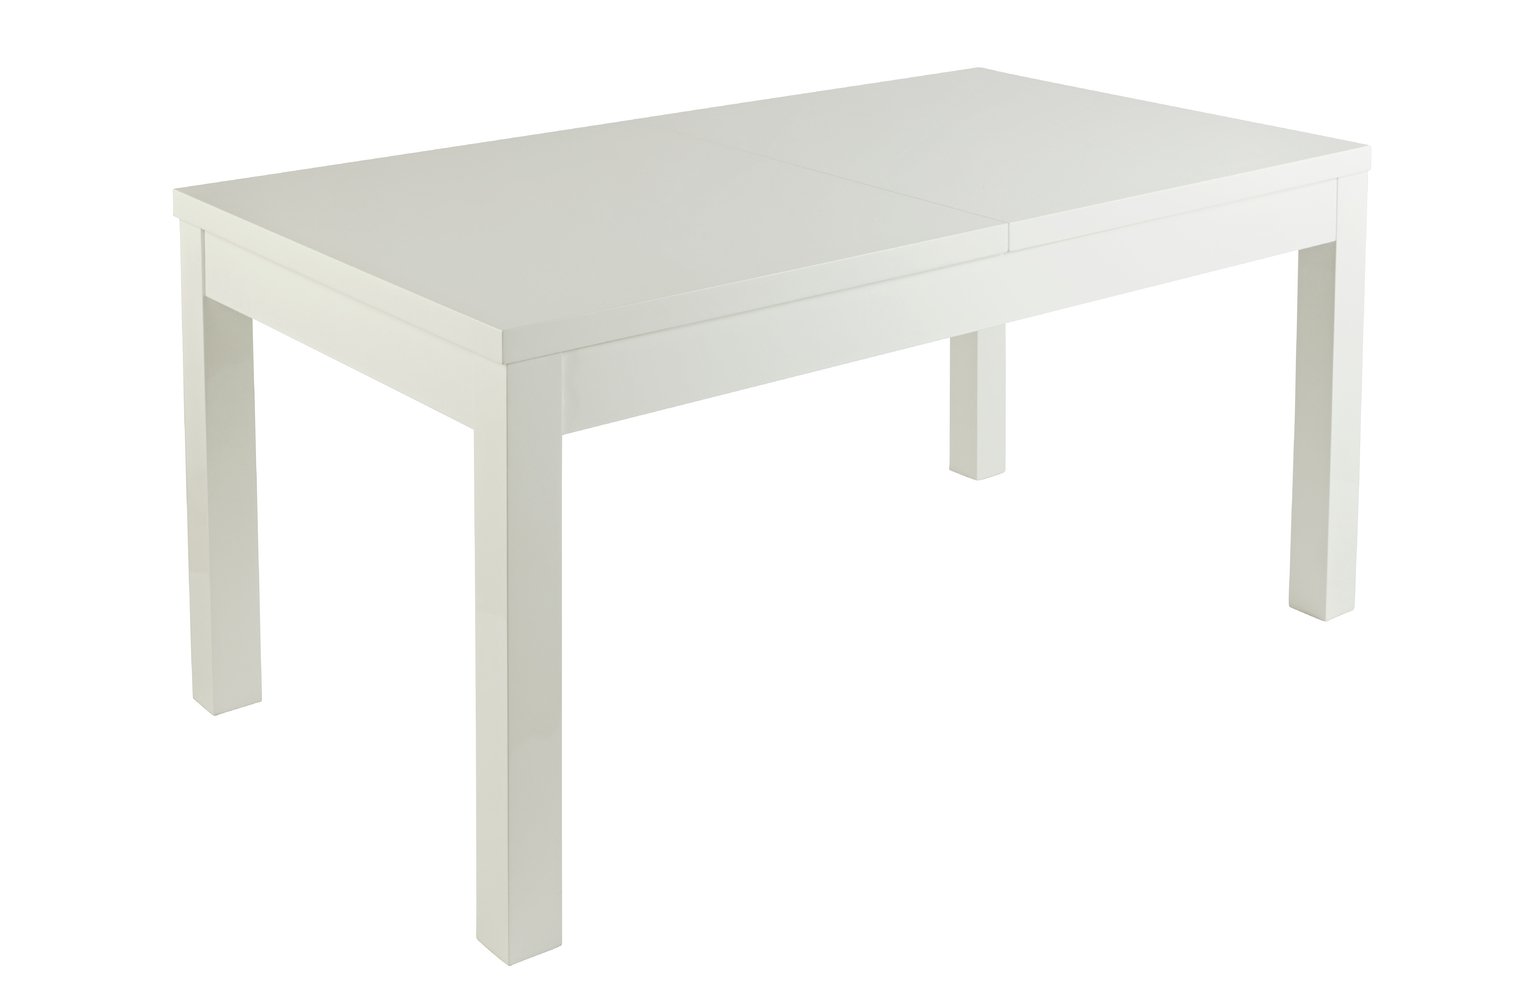 Argos Home Lyssa XL Extendable Table & 8 Milo Chairs Reviews